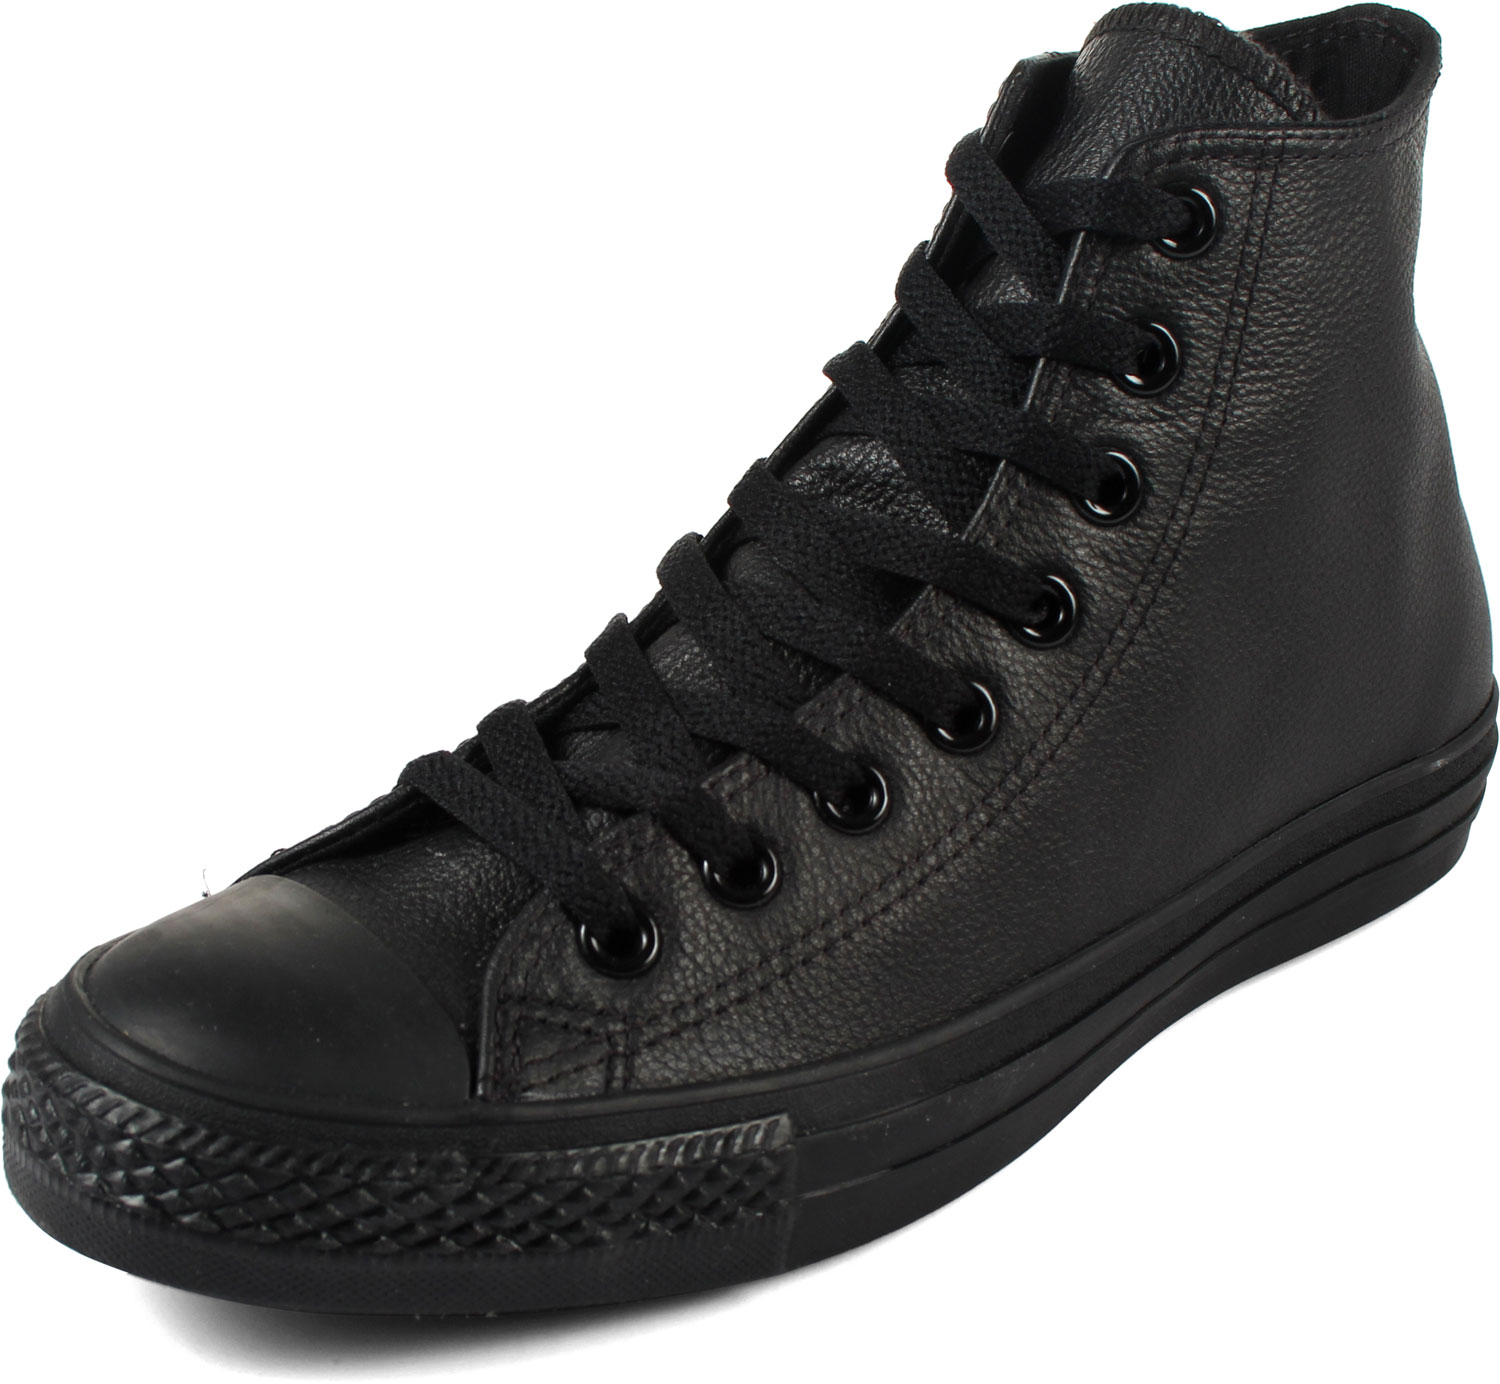 black leather shoes converse